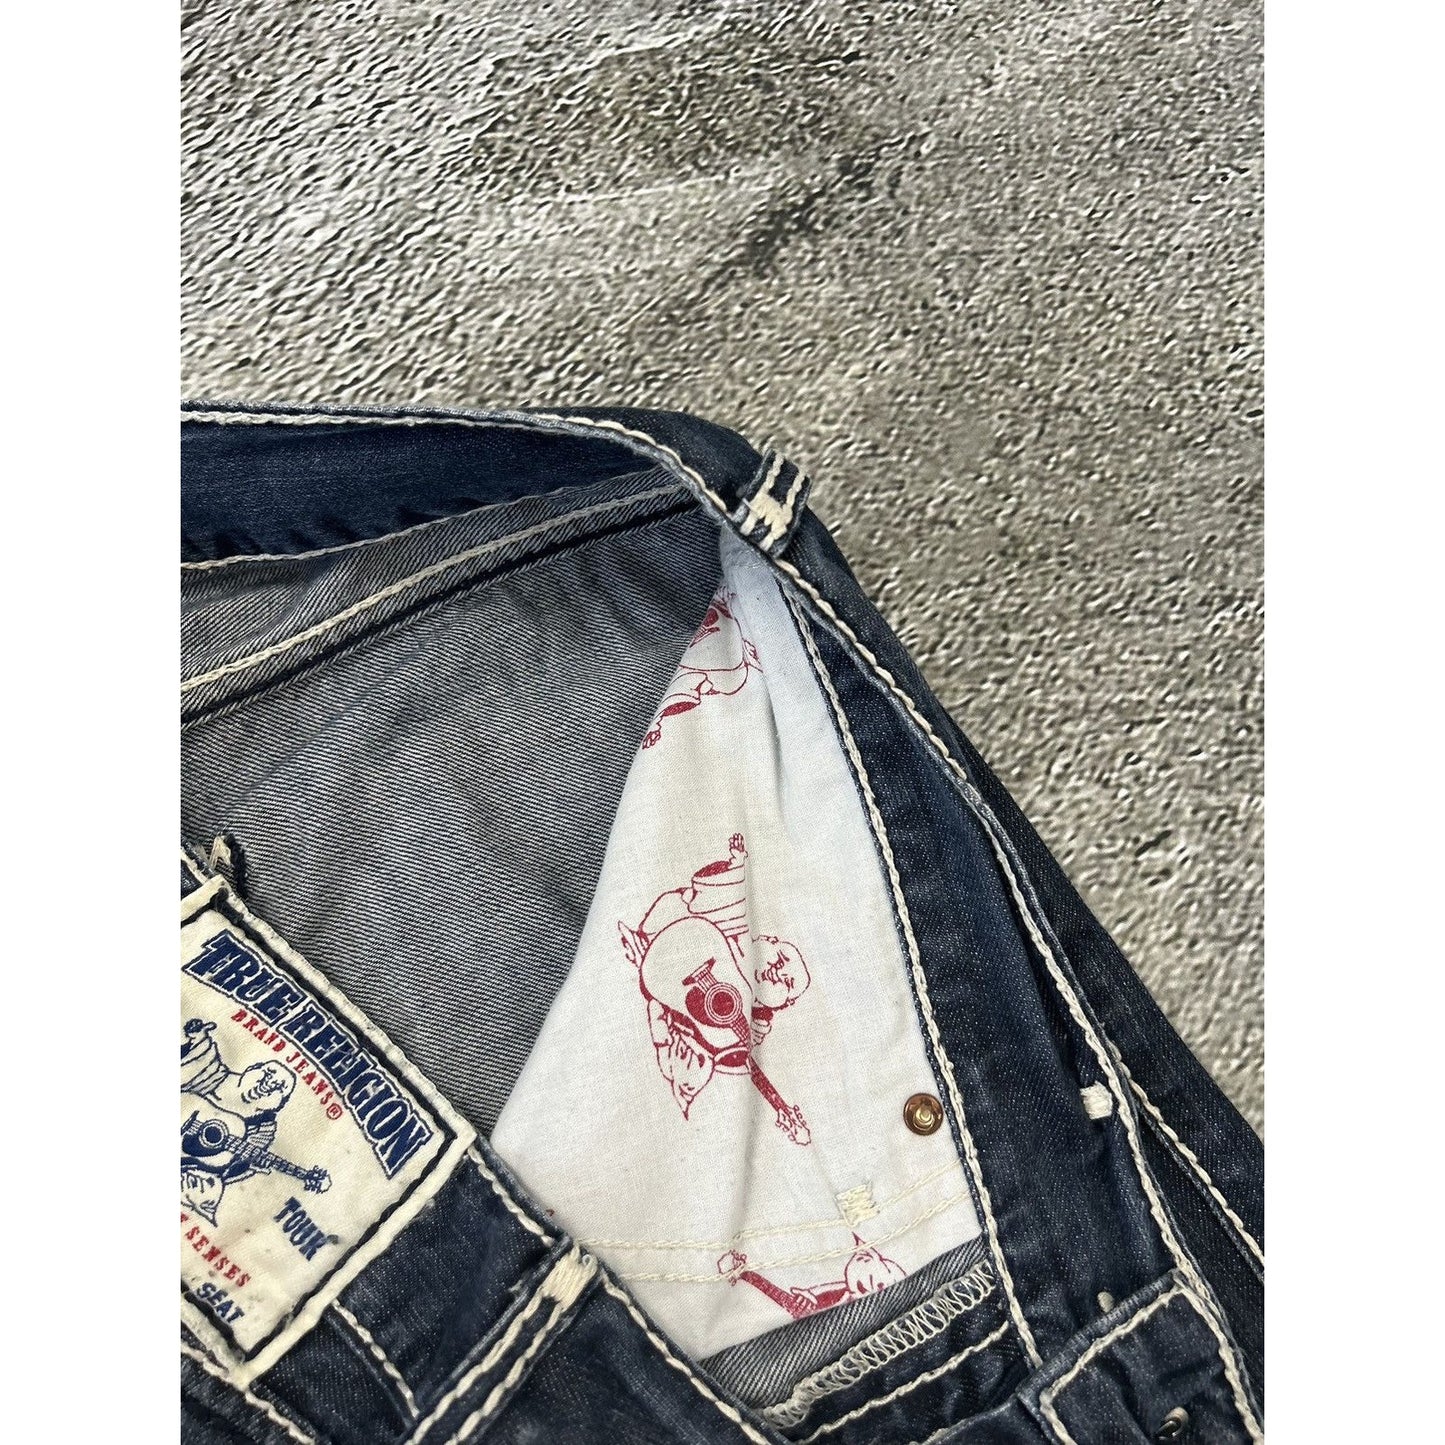 True Religion navy jeans white thick stitching Y2K